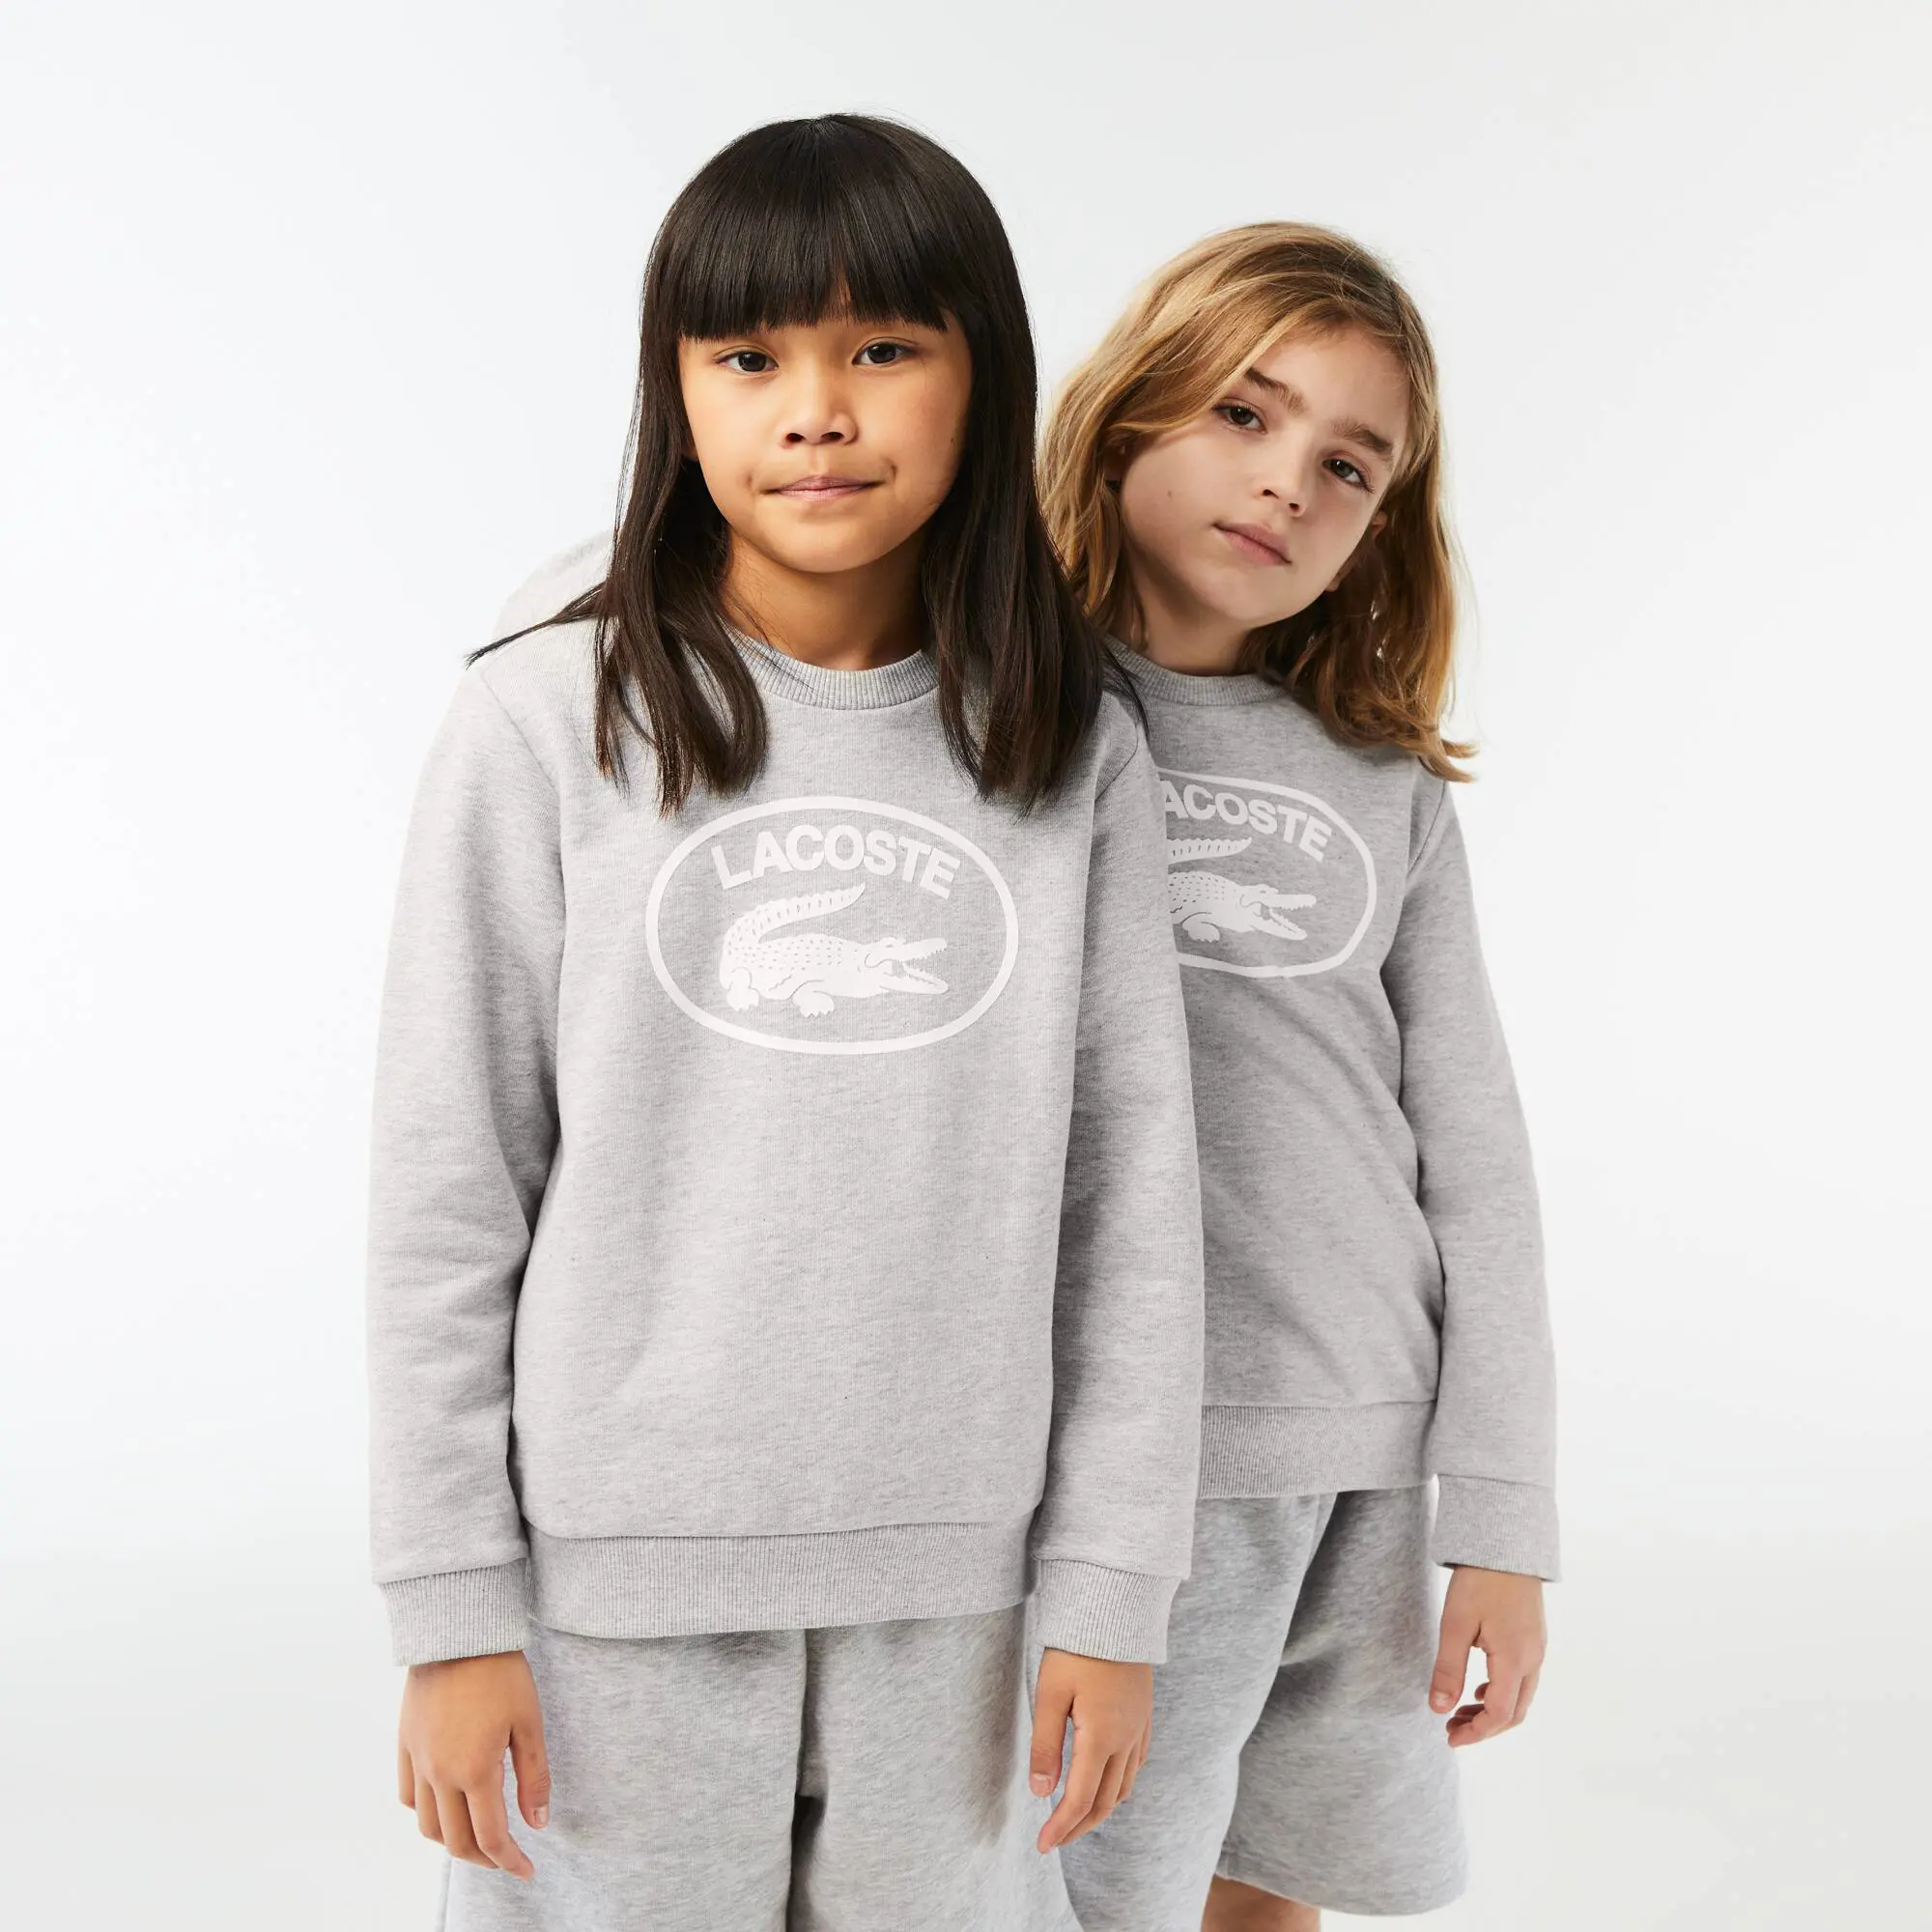 Lacoste Sweatshirt color block com marca em contraste Lacoste para criança. 1